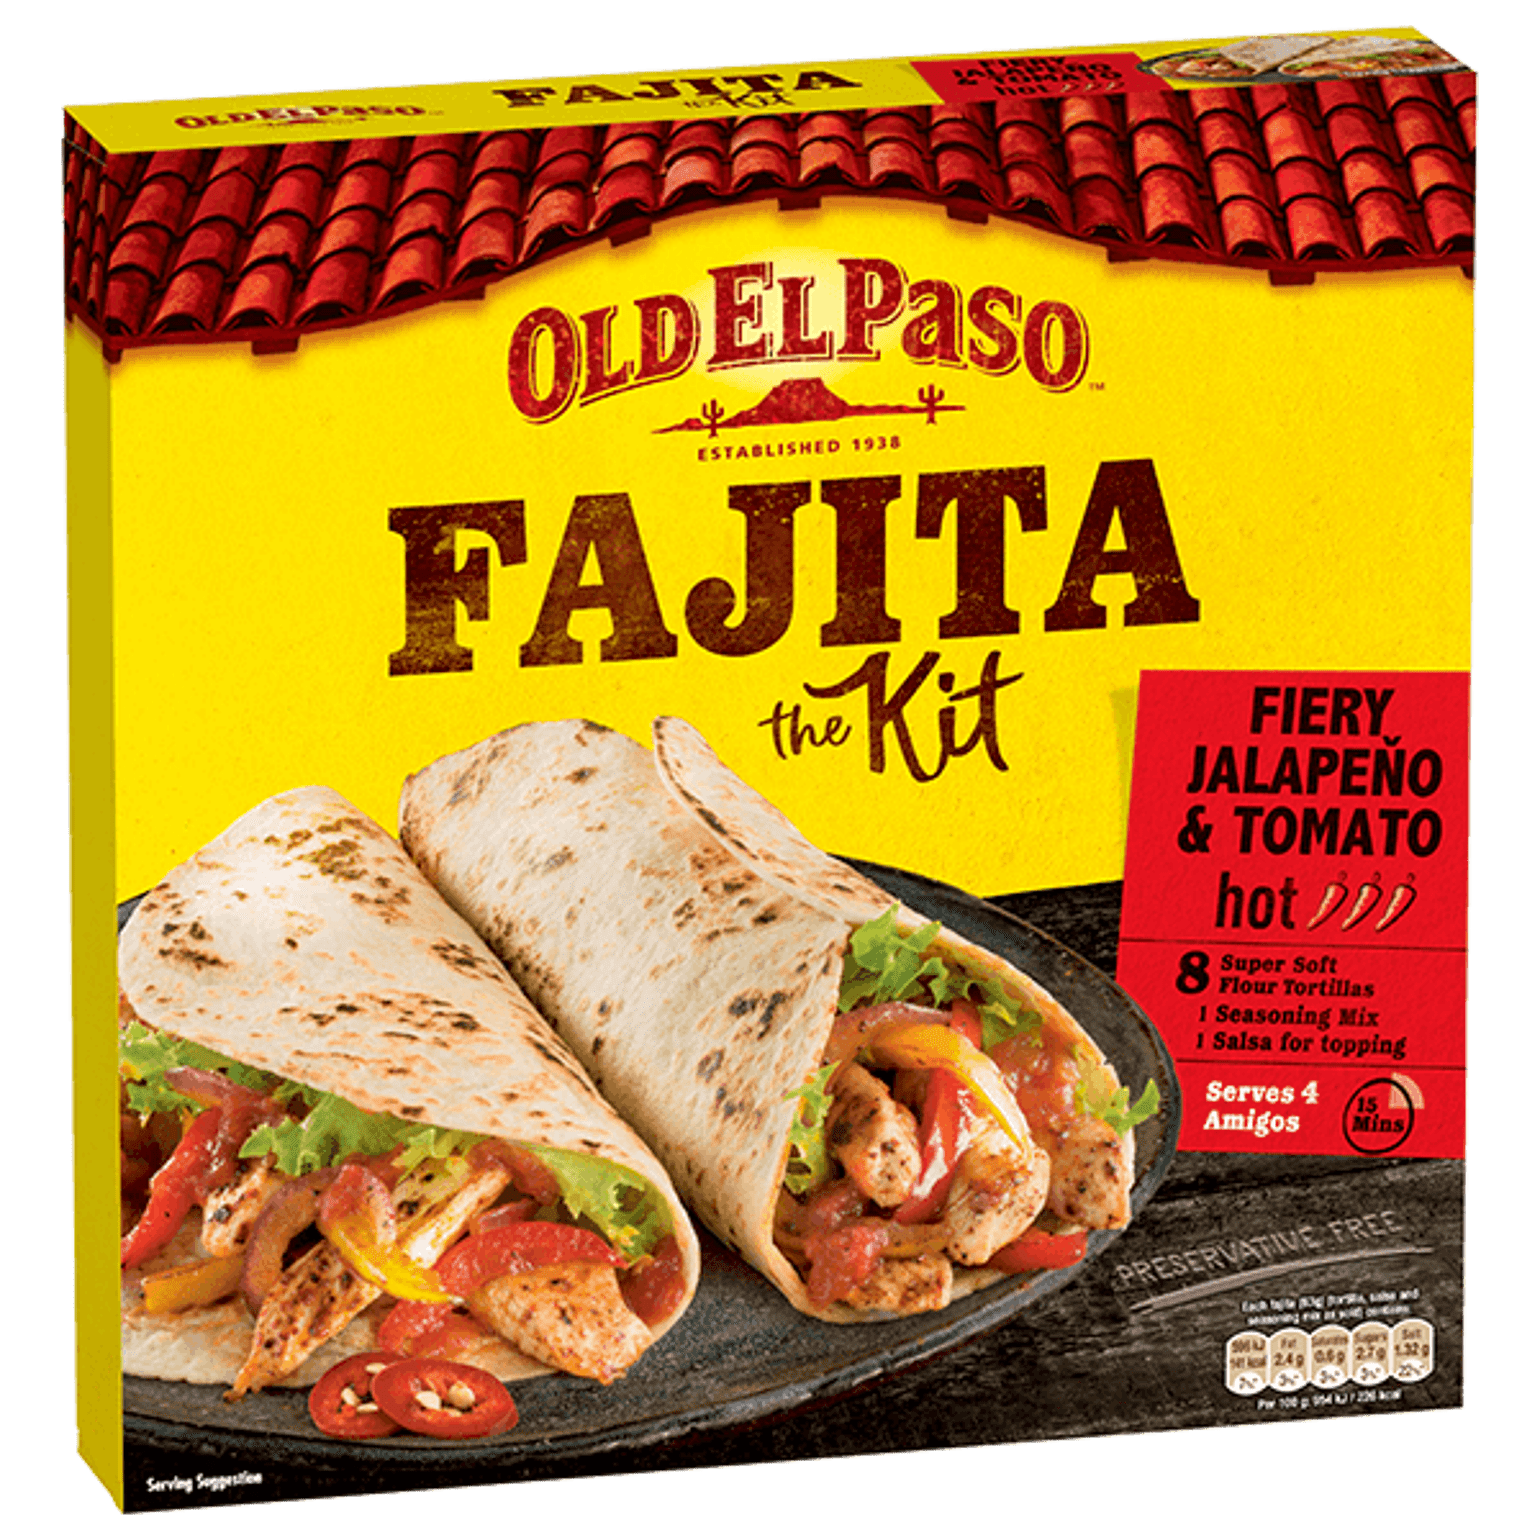 pack of Old El Paso's fiery jalapeno & tomato hot fajita kit containing super soft tortillas, seasoning mix & salsa (500g)